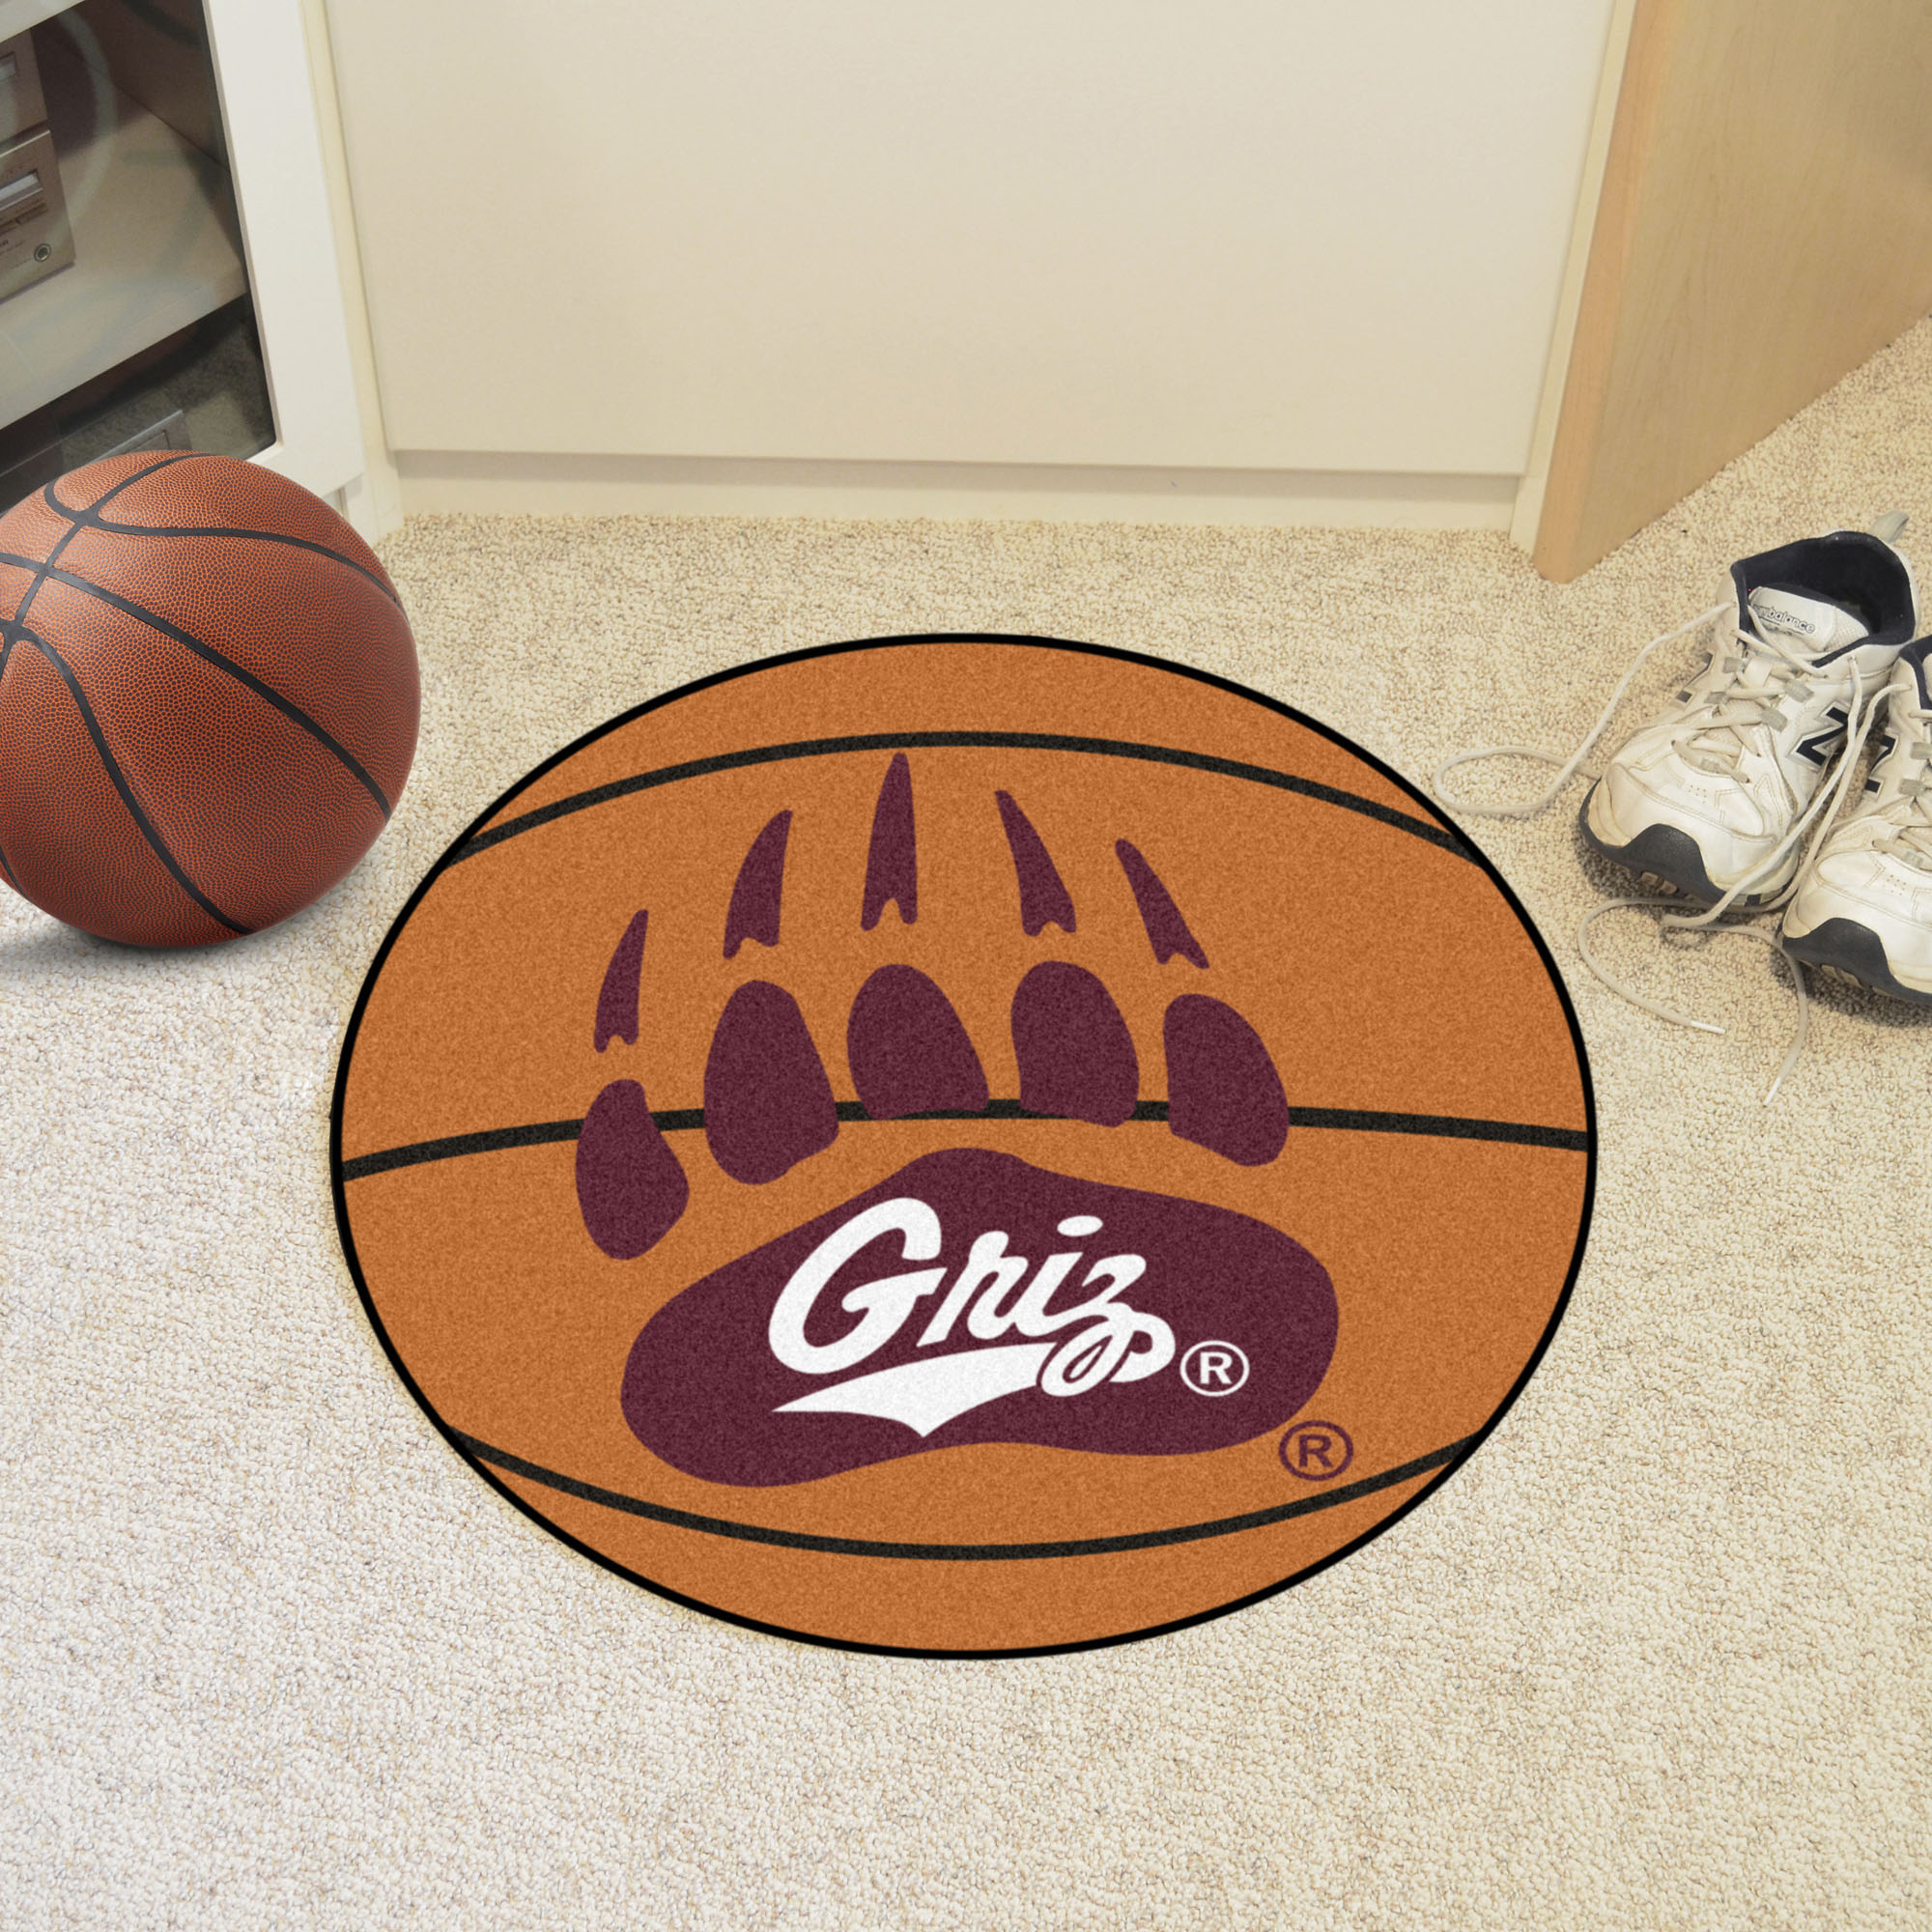 University of Montana Ball Shaped Area rugs (Ball Shaped Area Rugs: Basketball)